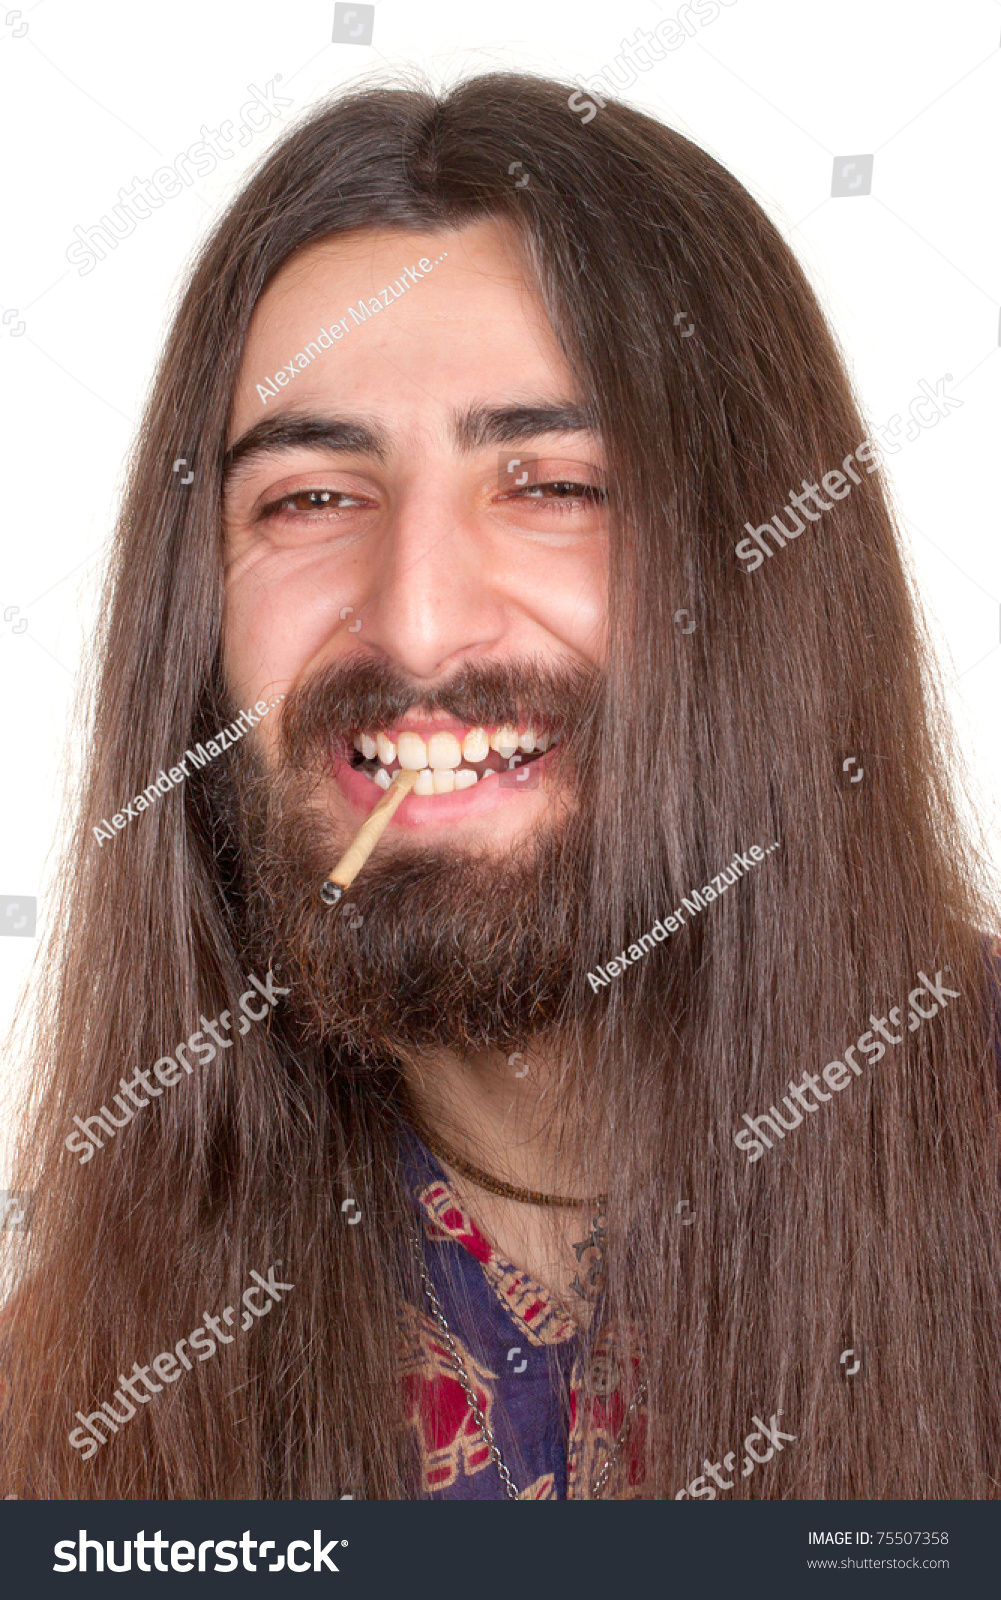 Long-Haired Hippie Man Smoking Cigarette Or Marijuana Joint Stock Photo ...